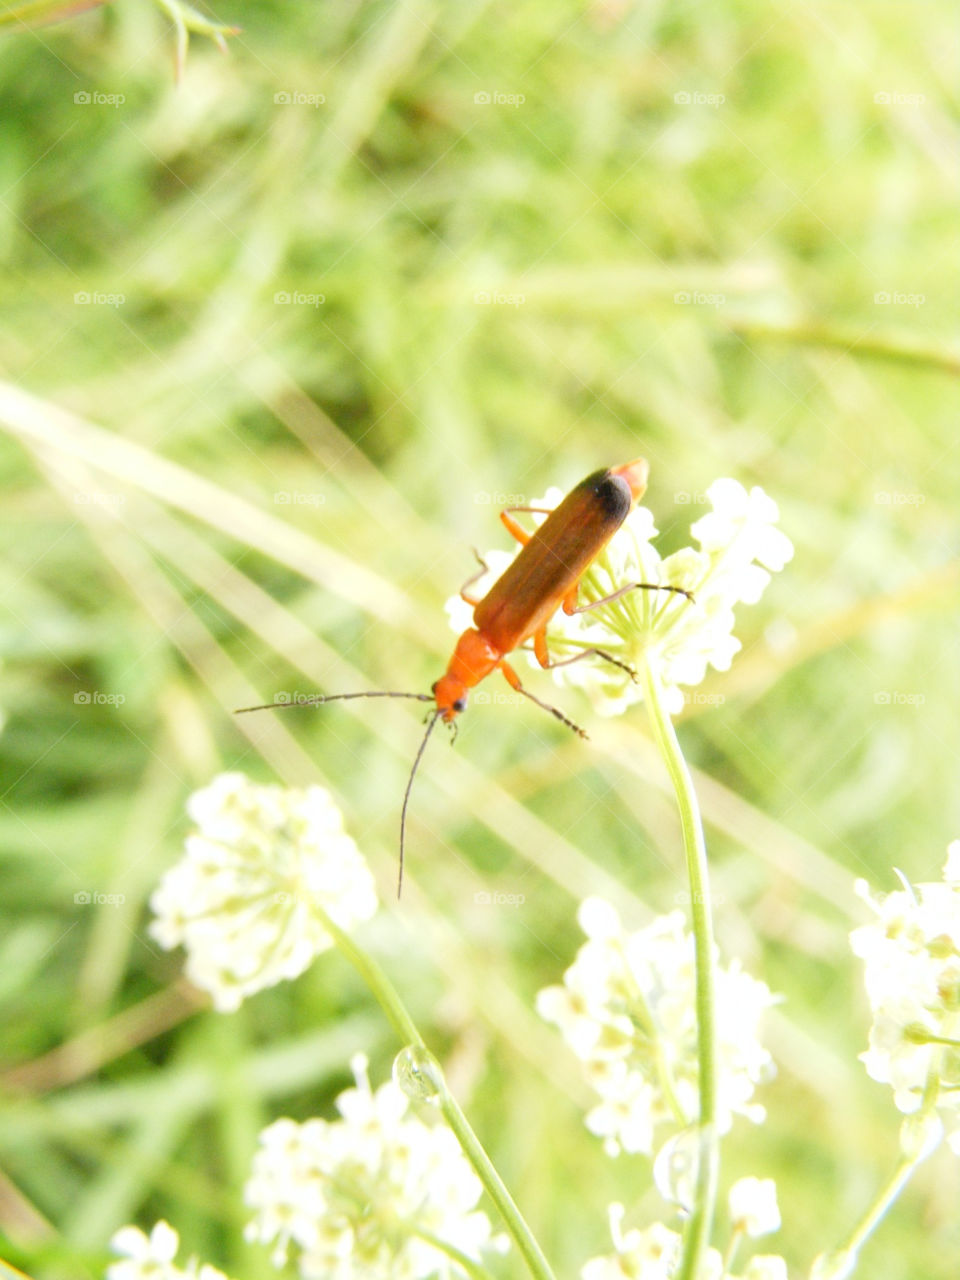 macro orange bug by james.c.parker.33